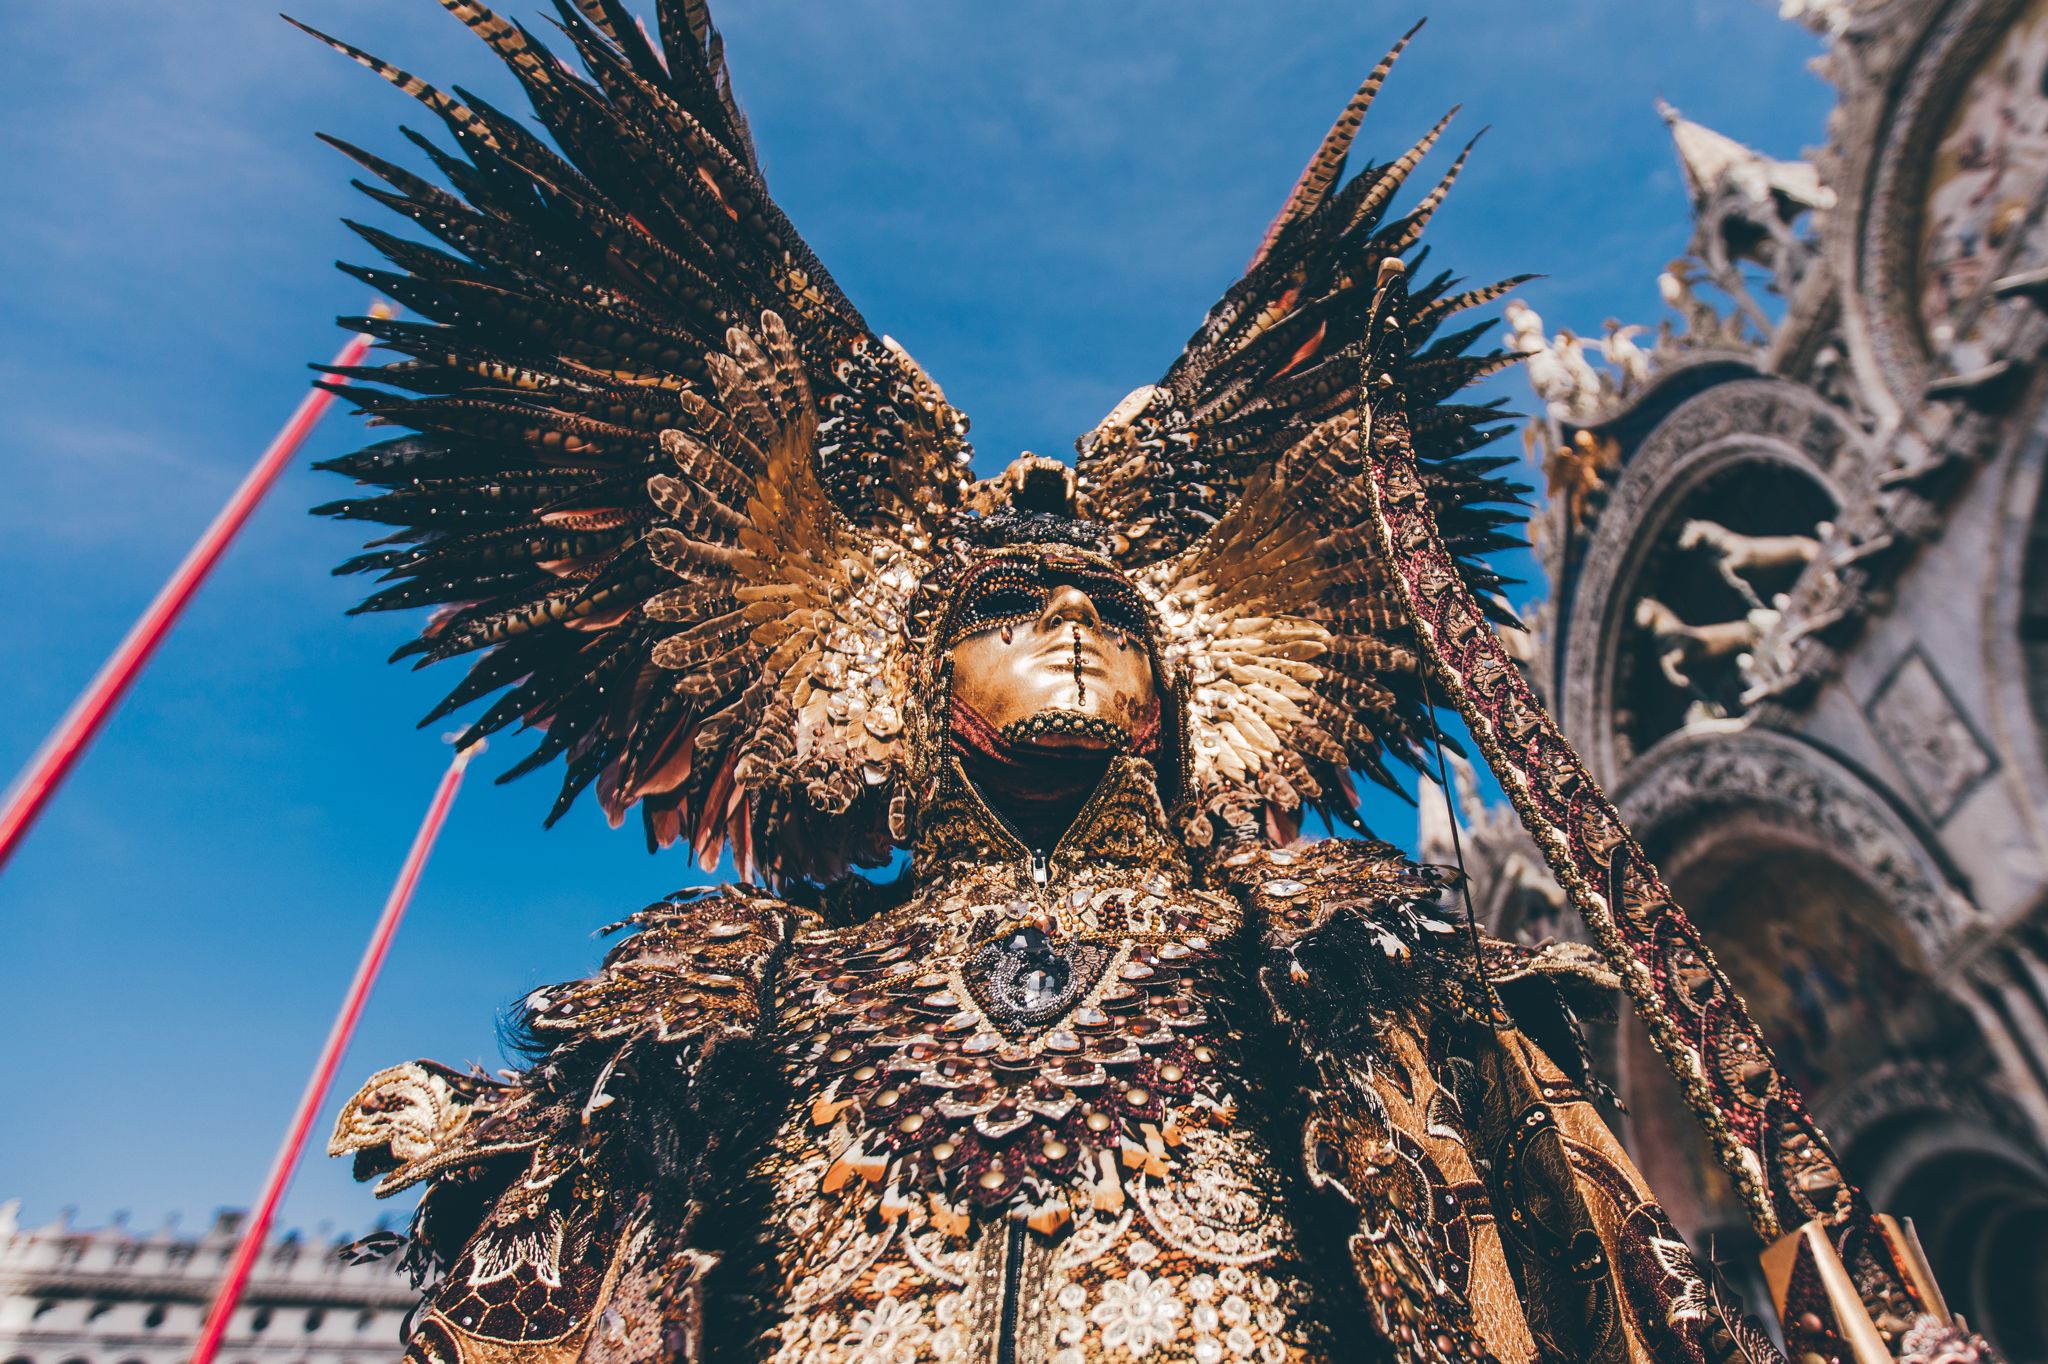 The Venice Carnival 2018. Venice, Italy